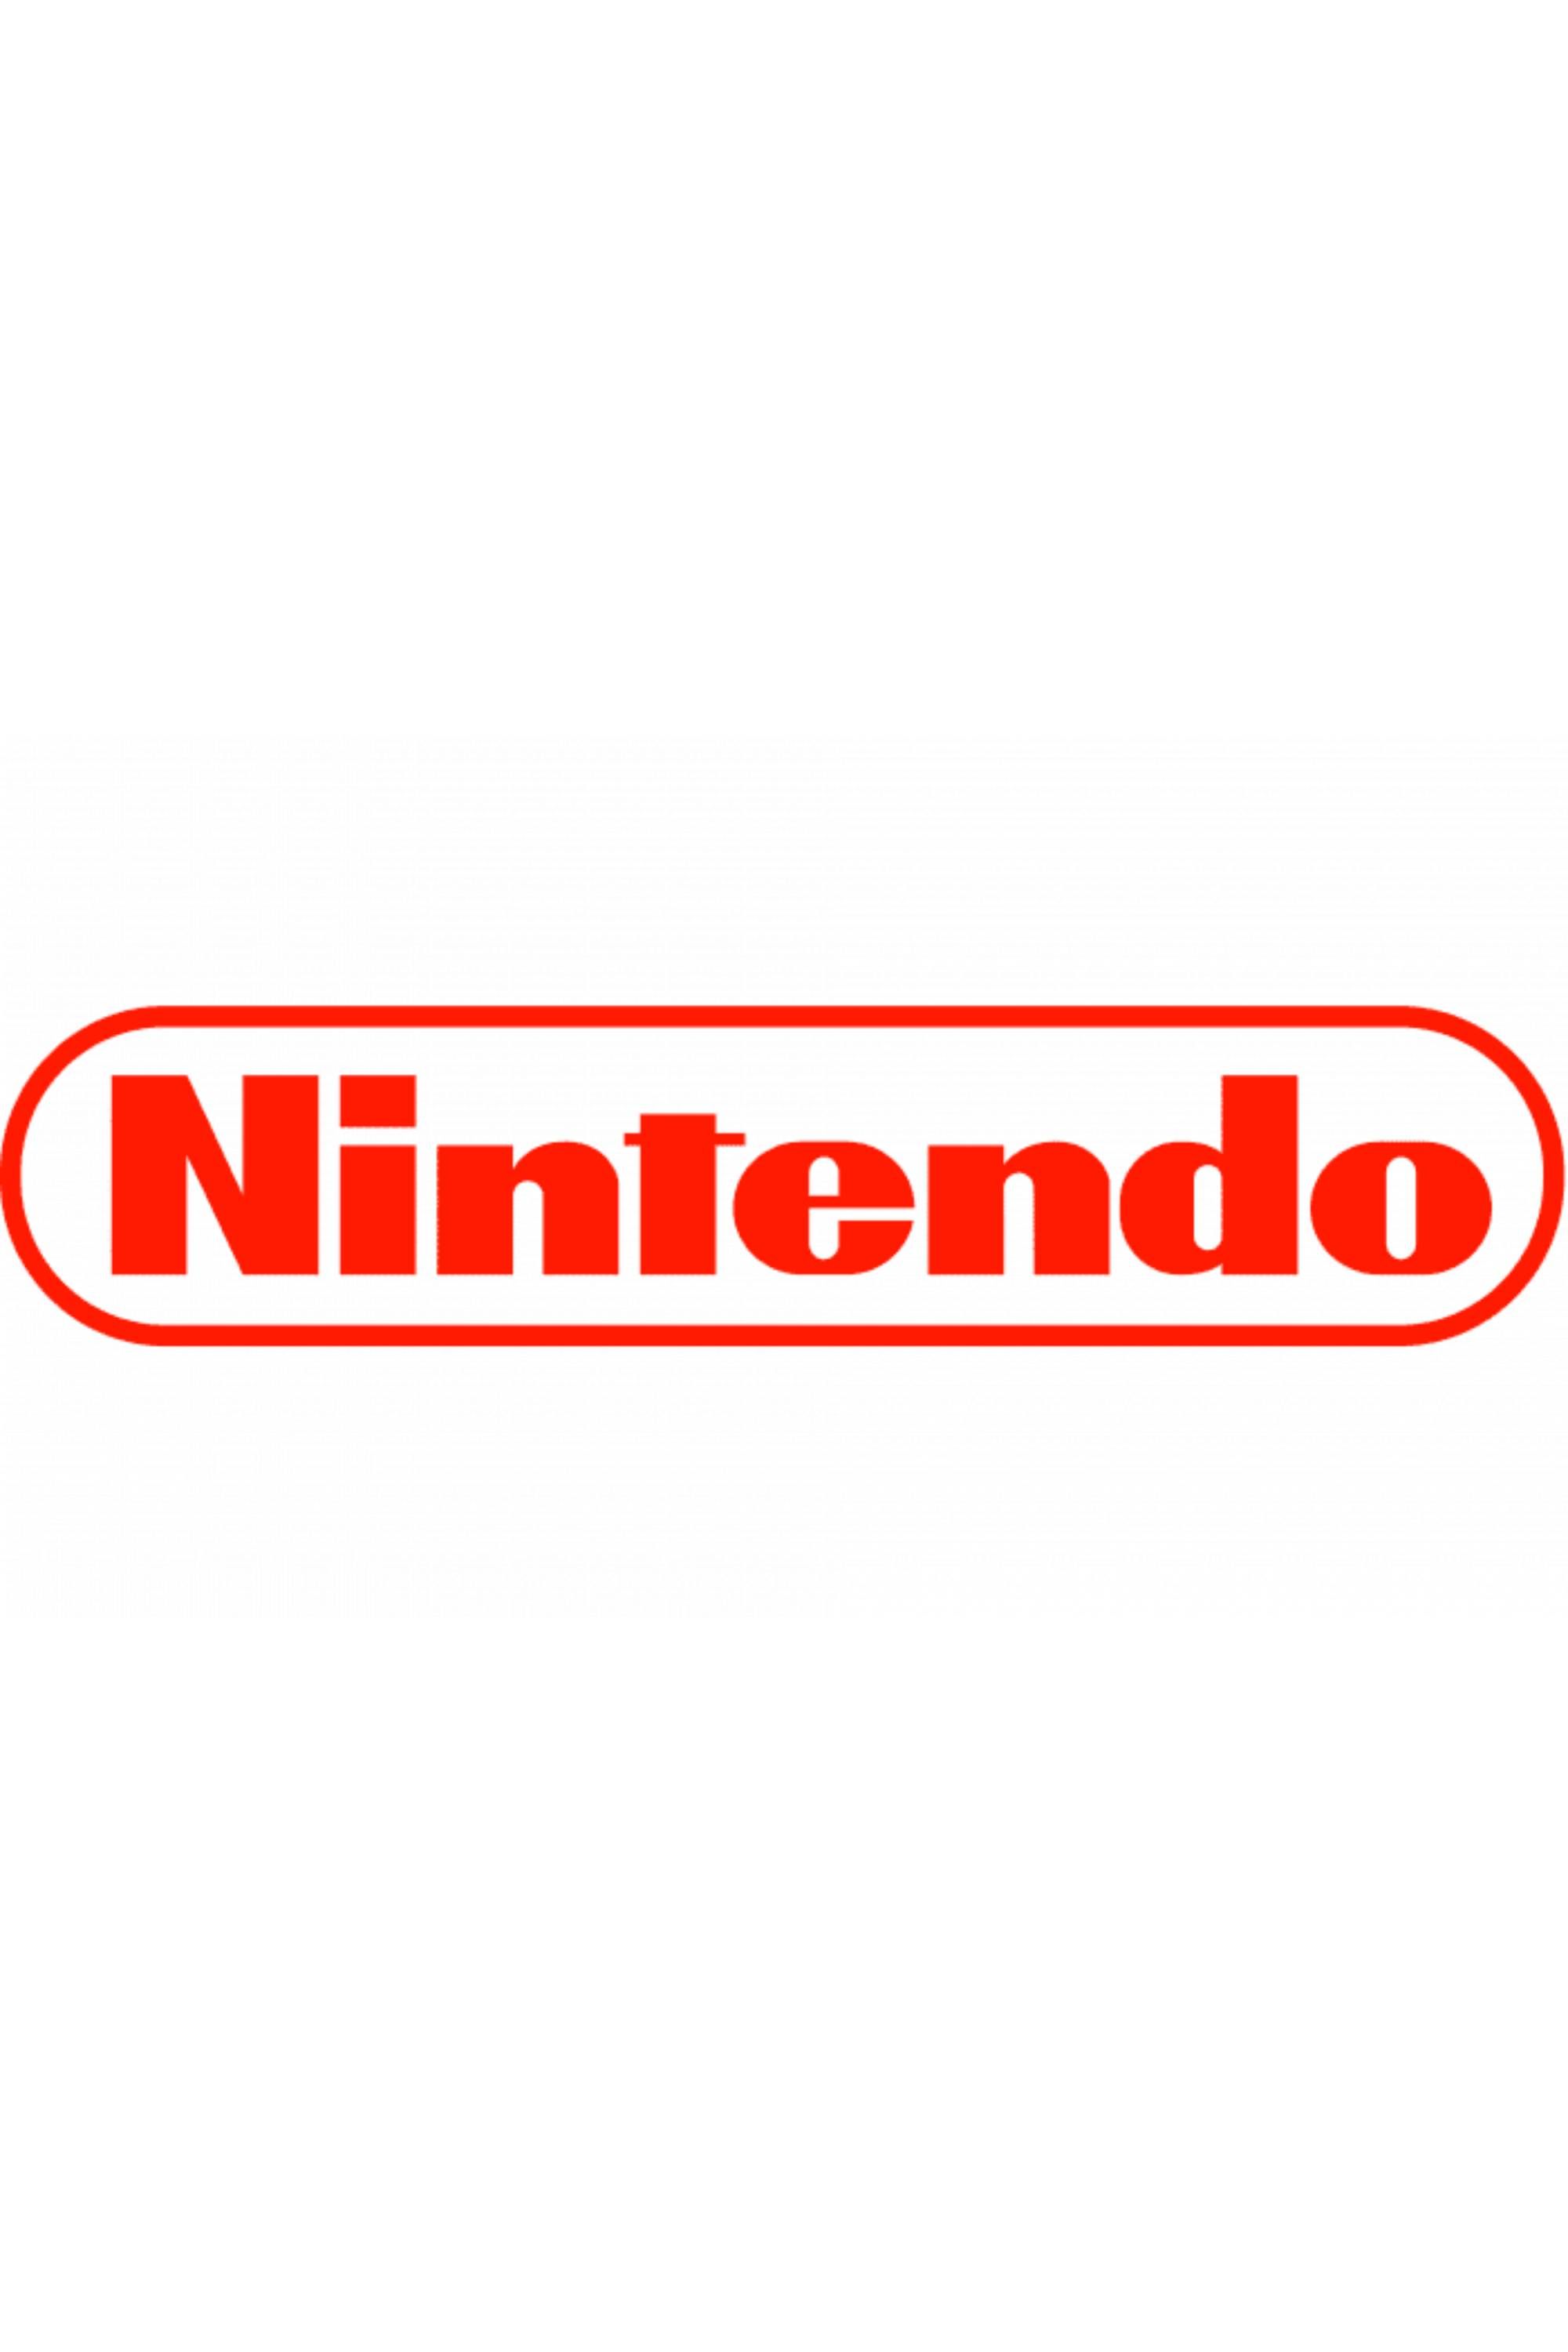 Unannounced Nintendo Recreation’s Codename Leaks On-line